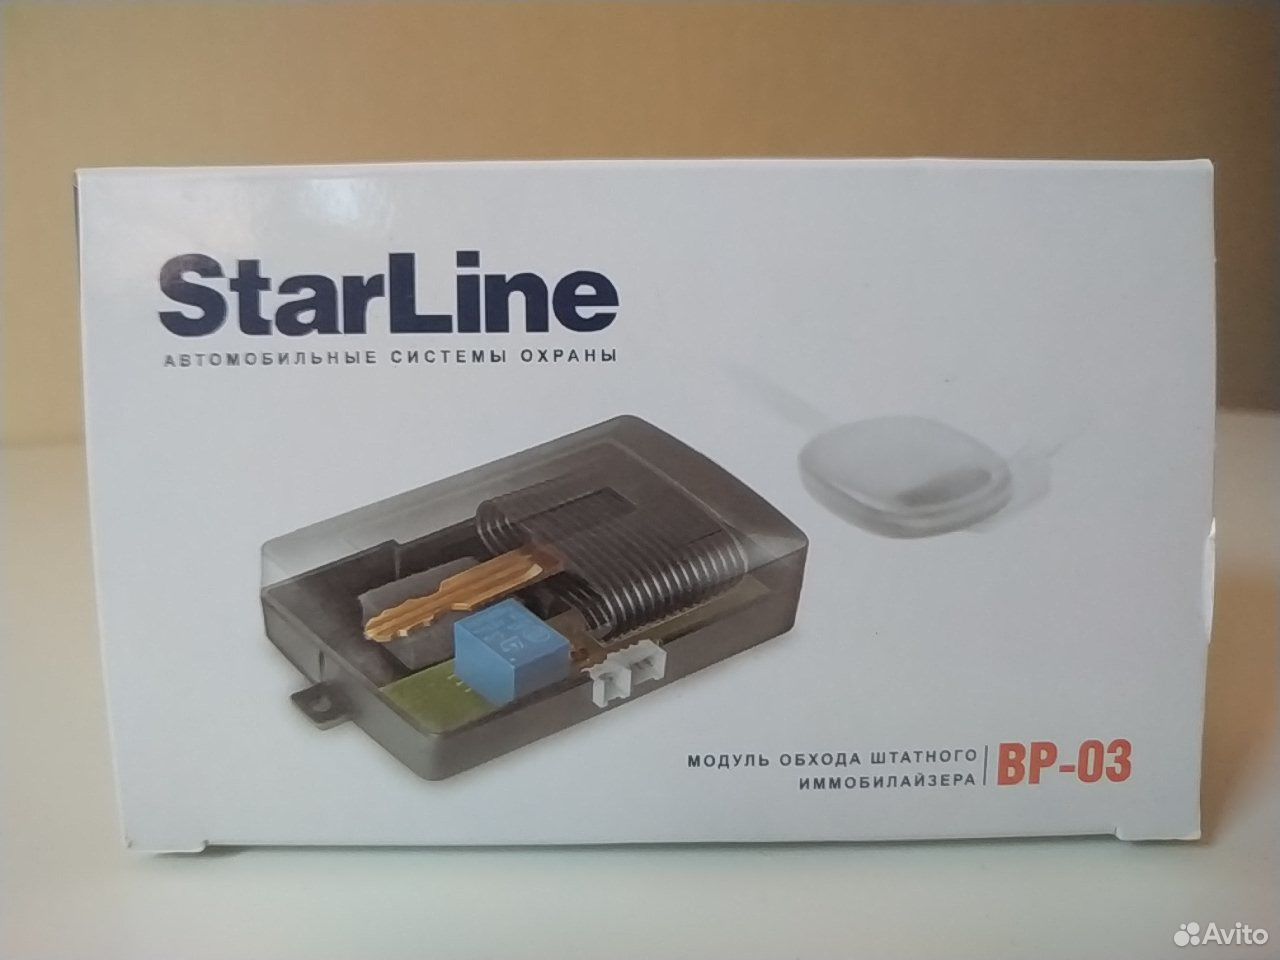 Обход иммобилайзера старлайн. Модуль обхода иммобилайзера STARLINE BP-03. Модуль обхода иммобилайзера 'STARLINE' bp3. Модуль обхода штатного иммобилайзера STARLINE. Старлайн обходчик иммобилайзера BP 03.